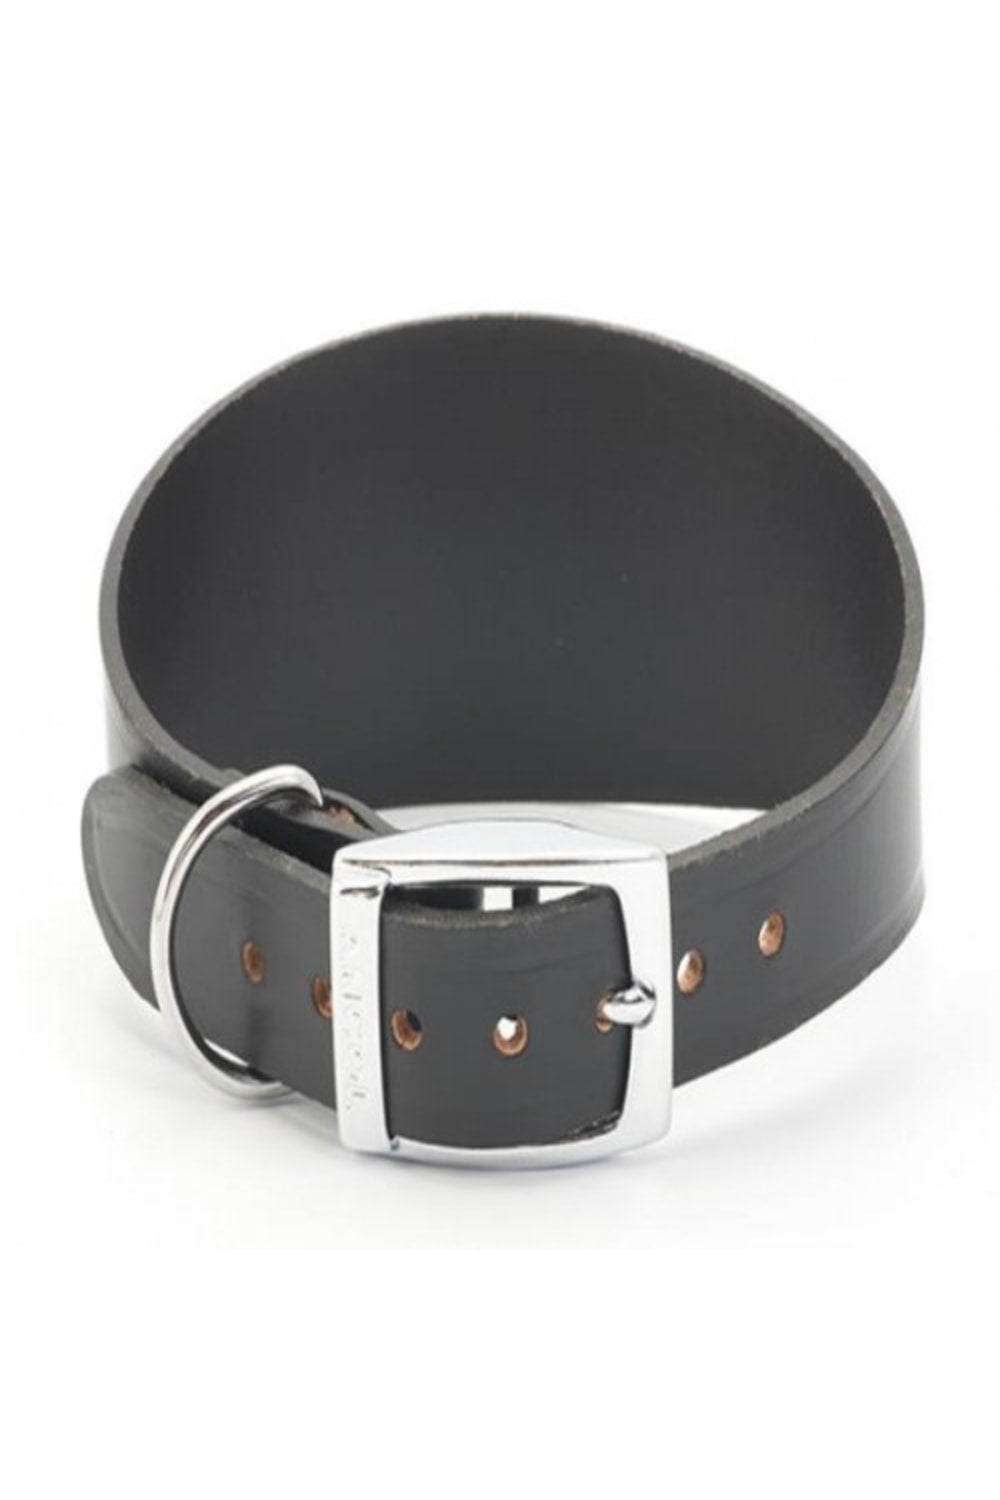 Ancol Greyhound Leather Dog Collar (Black) (19in)